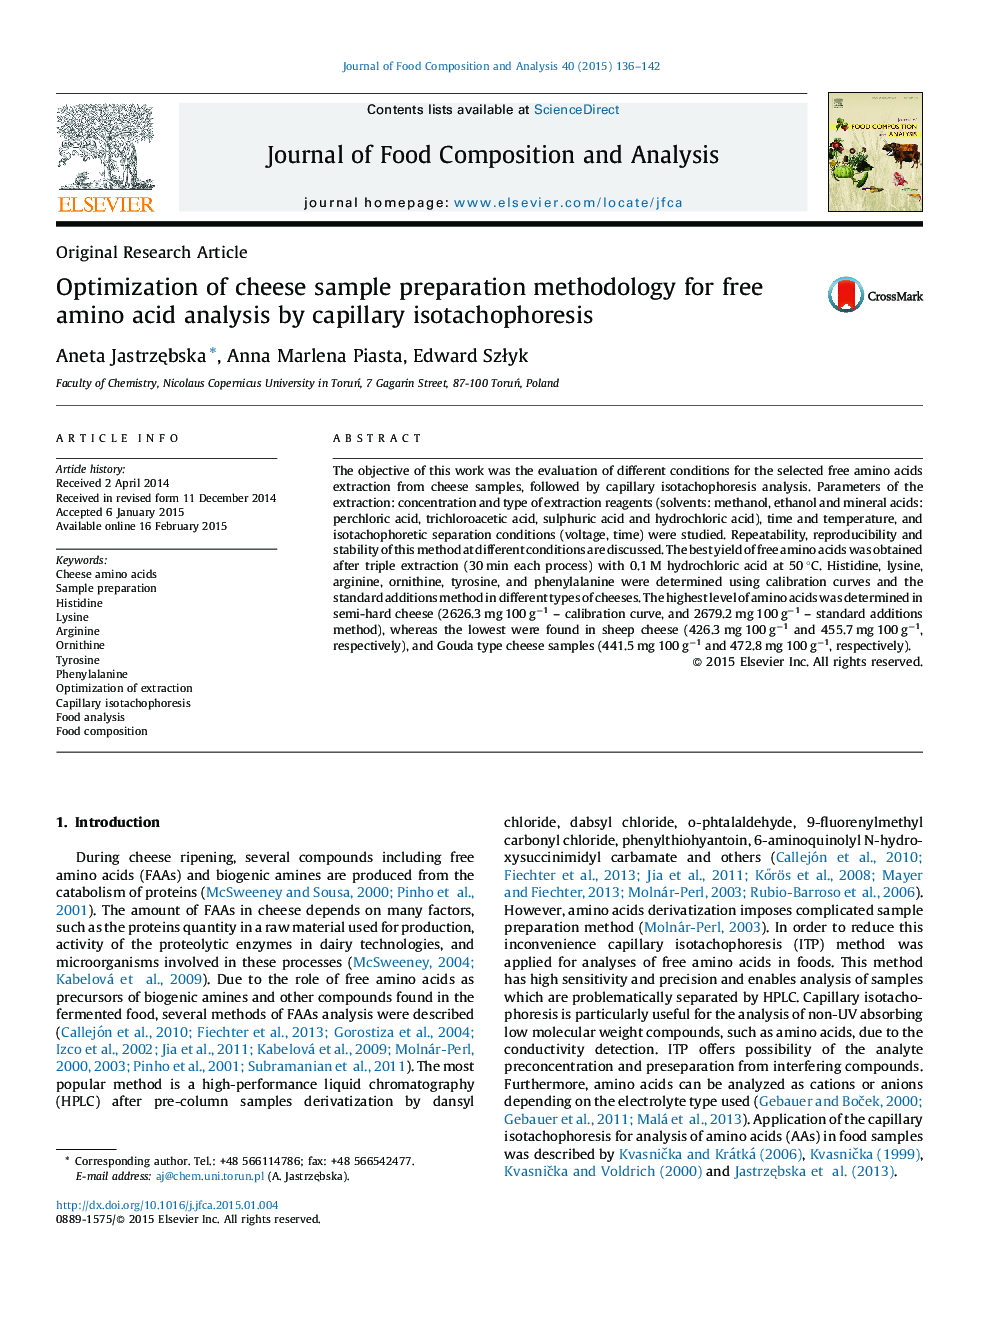 Optimization of cheese sample preparation methodology for free amino acid analysis by capillary isotachophoresis